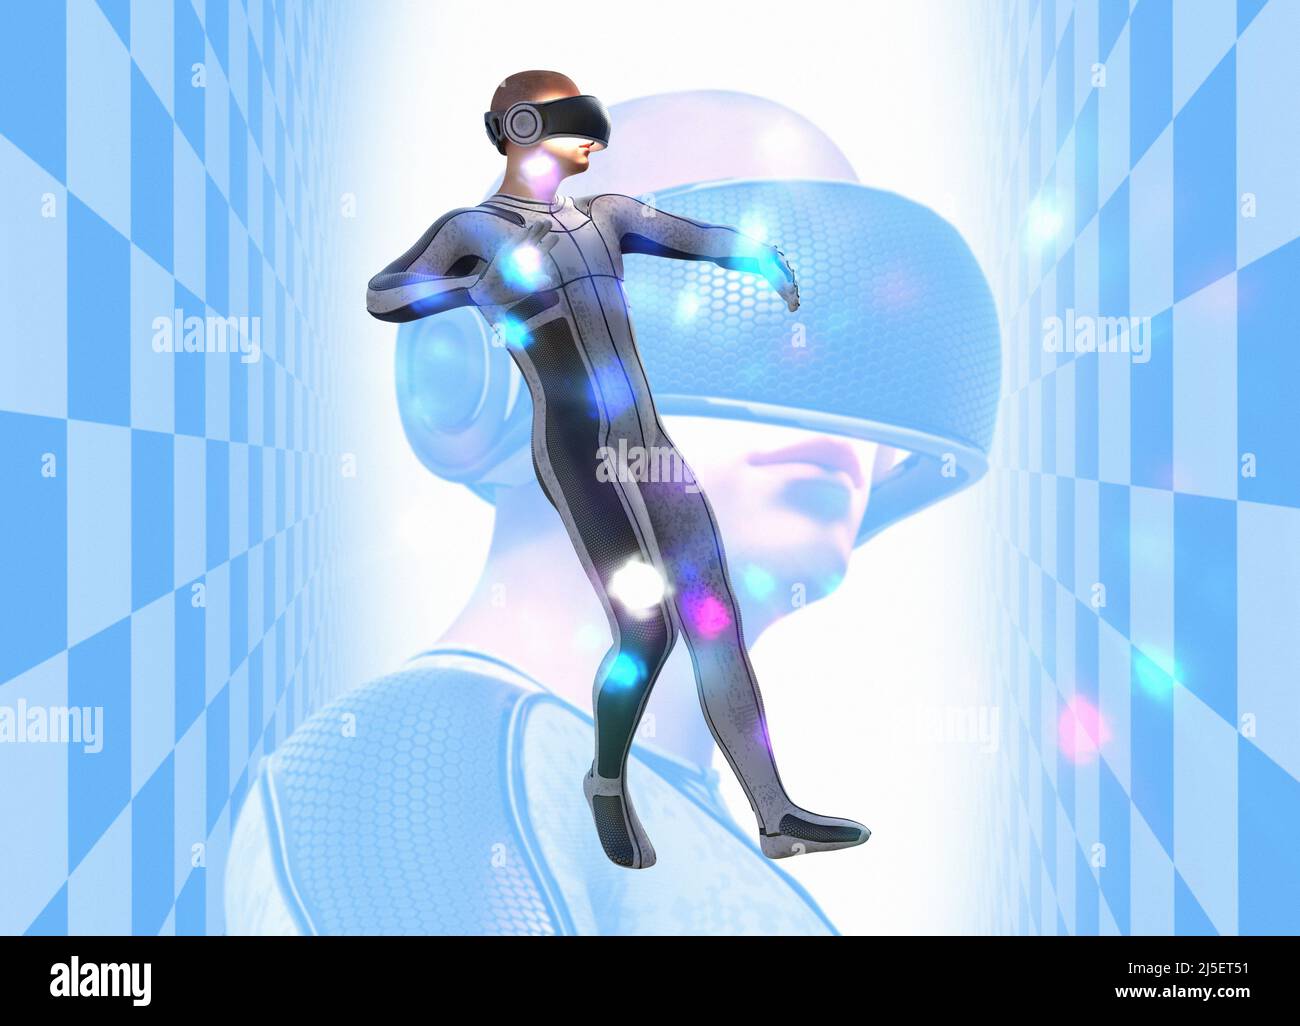 Man wearing a virtual reality headset, illustration Stock Photo